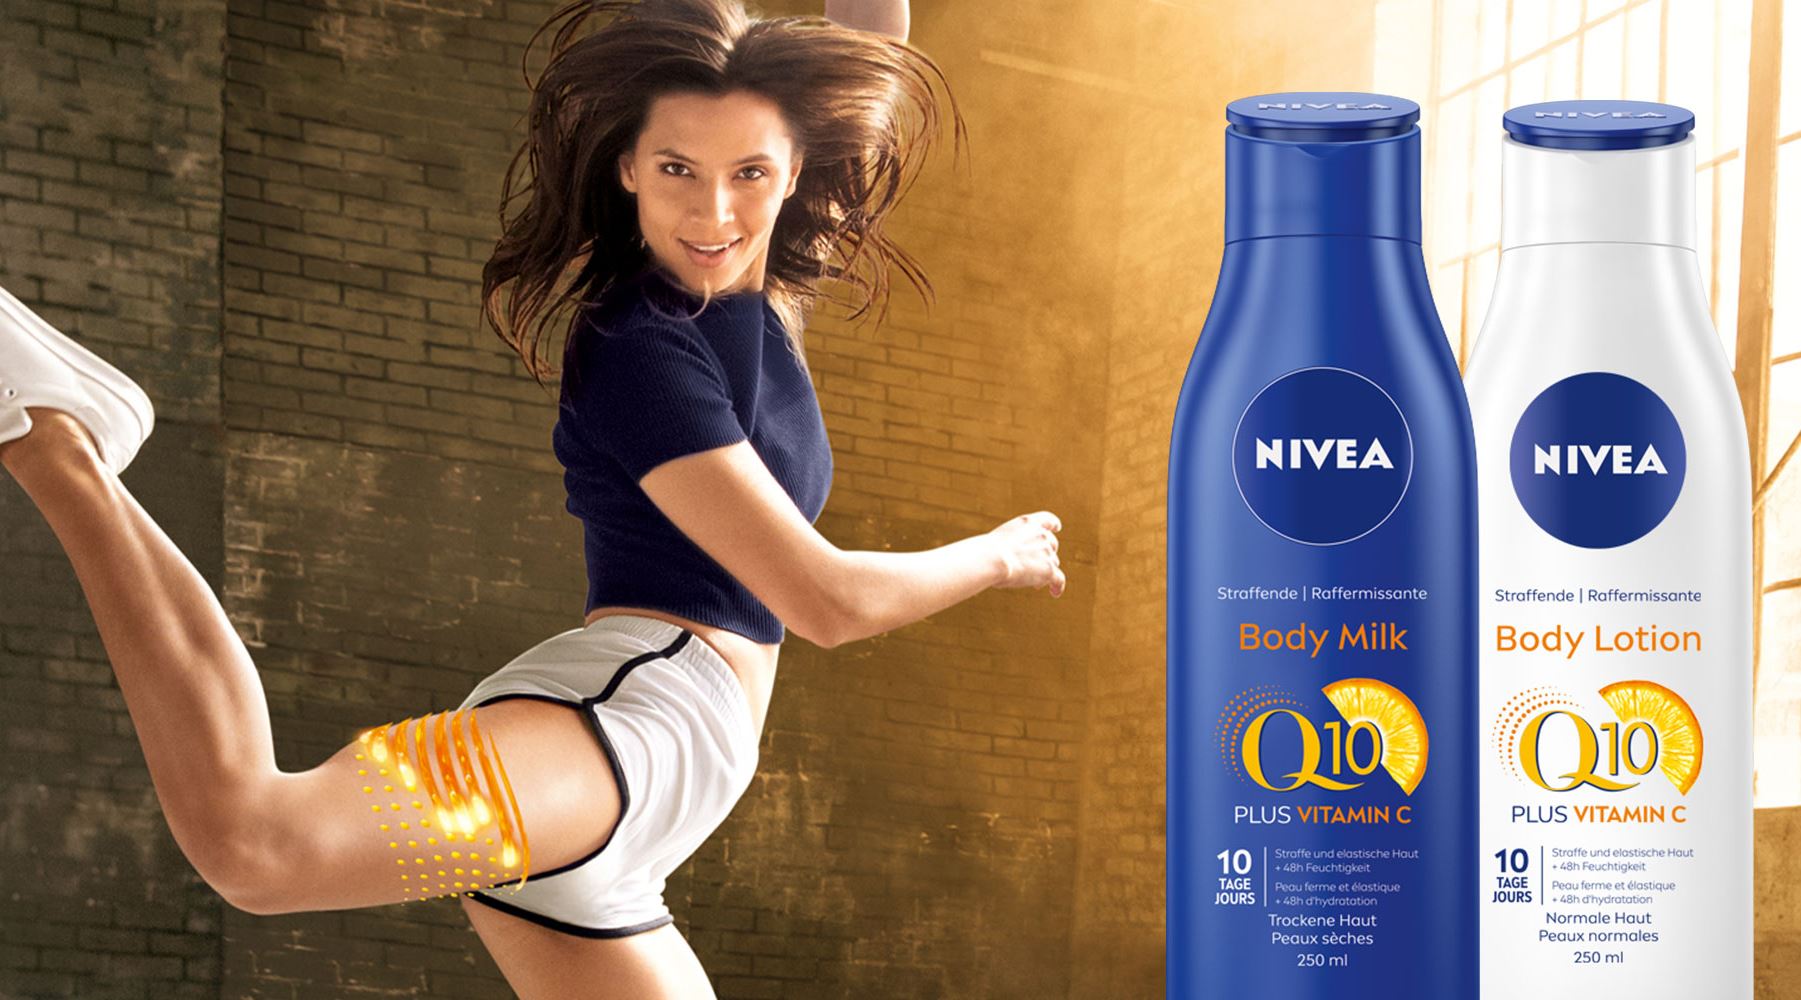 Junge Frau im Sportoutfit mit Q10 Body Milk und Body Lotion